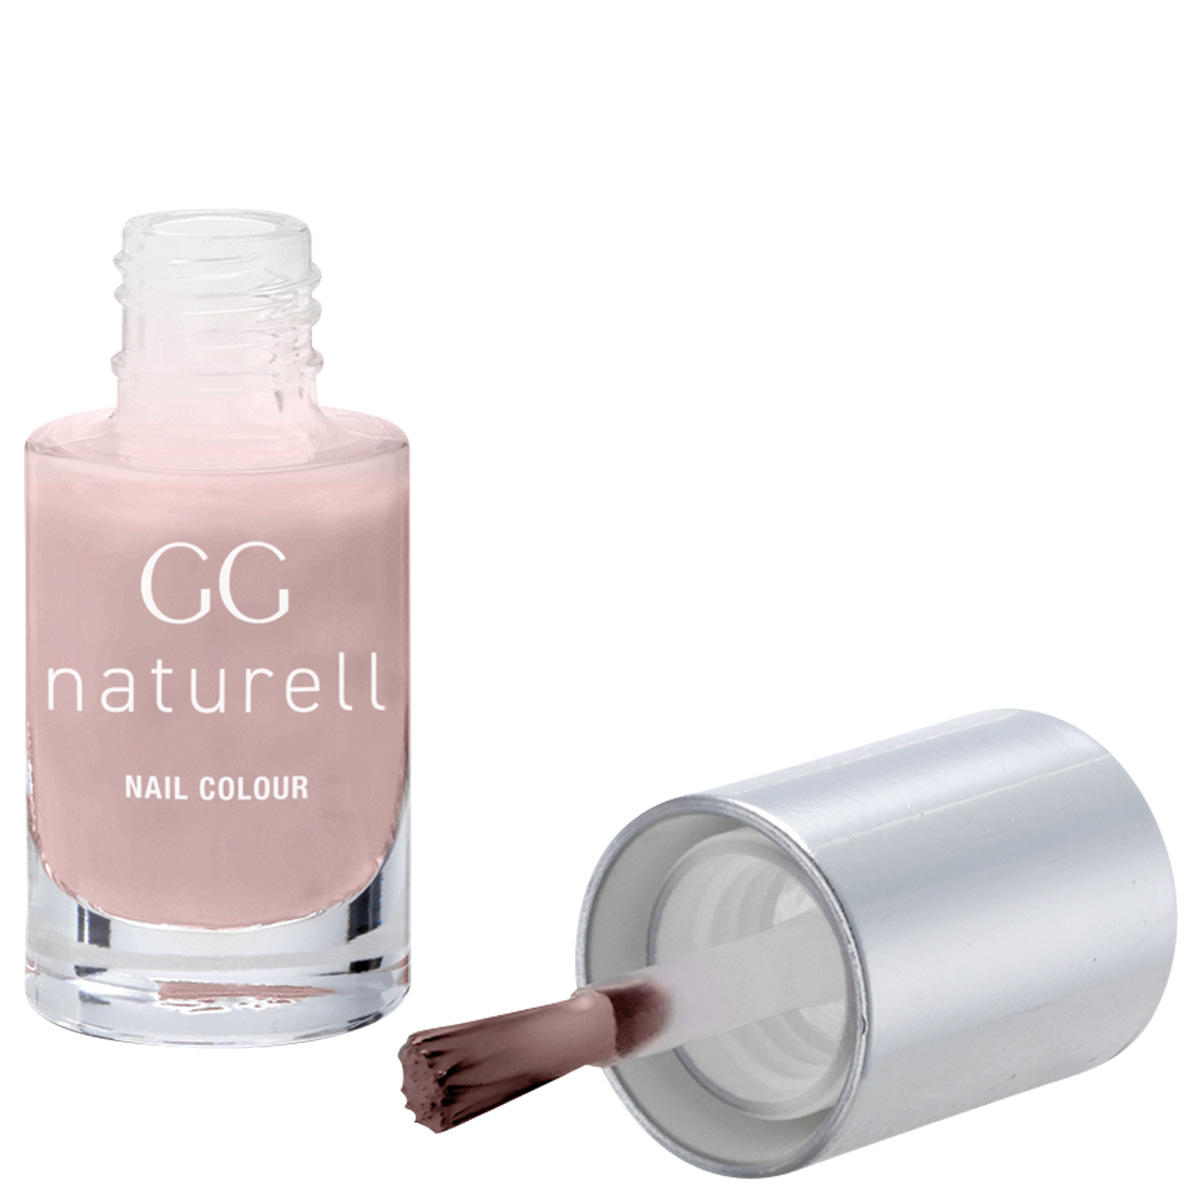 GERTRAUD GRUBER GG naturell Nail Colour 20 Magnolia 5 ml